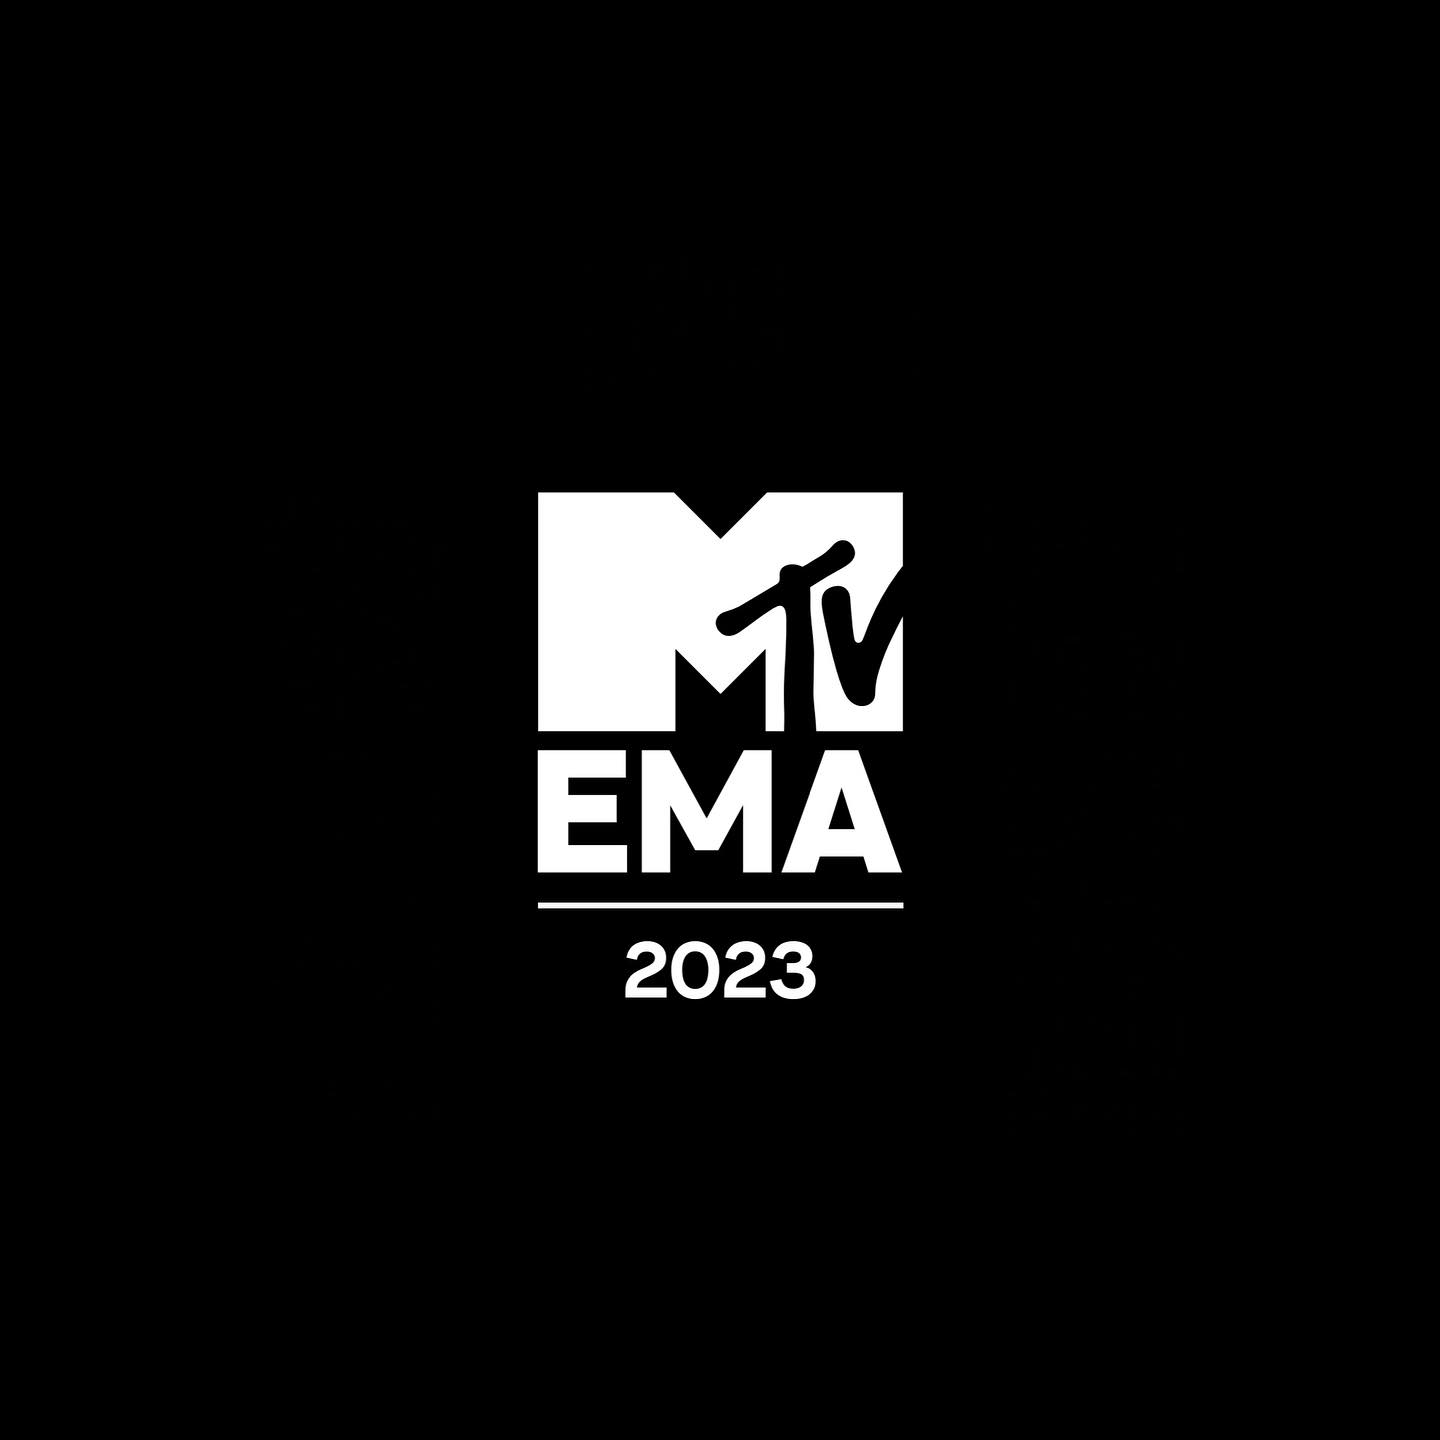 2023 MTV EMA、イラン・パレスチナ戦争の余波でキャンセル...政情不安でステージ中止
